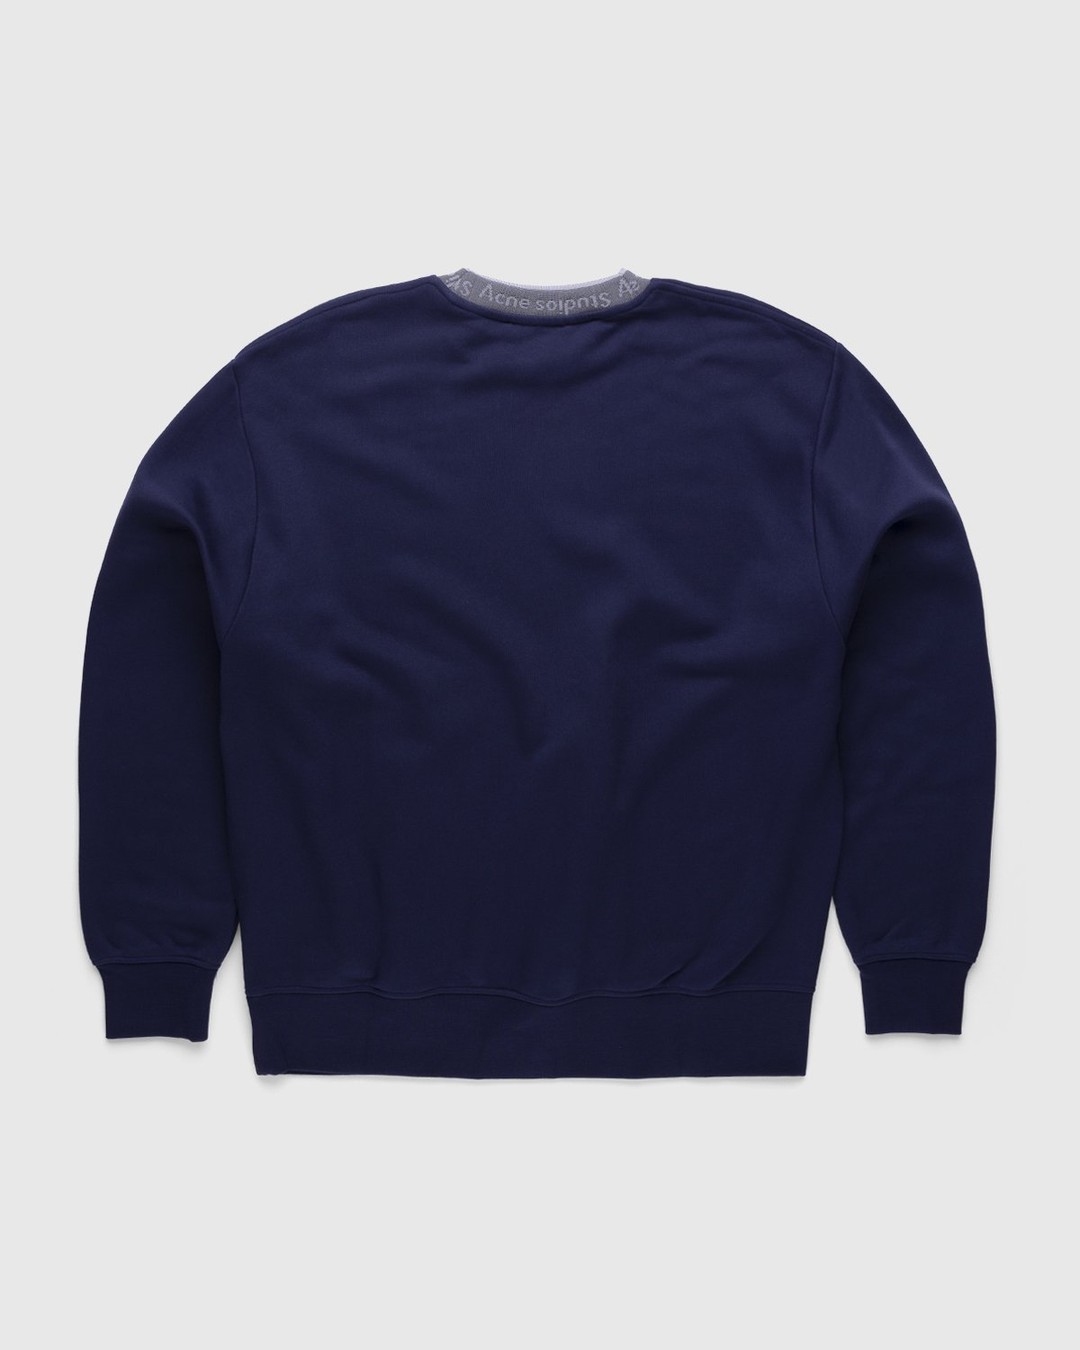 Acne Studios – Logo Rib Sweatshirt Indigo Blue - Sweatshirts - Blue - Image 2